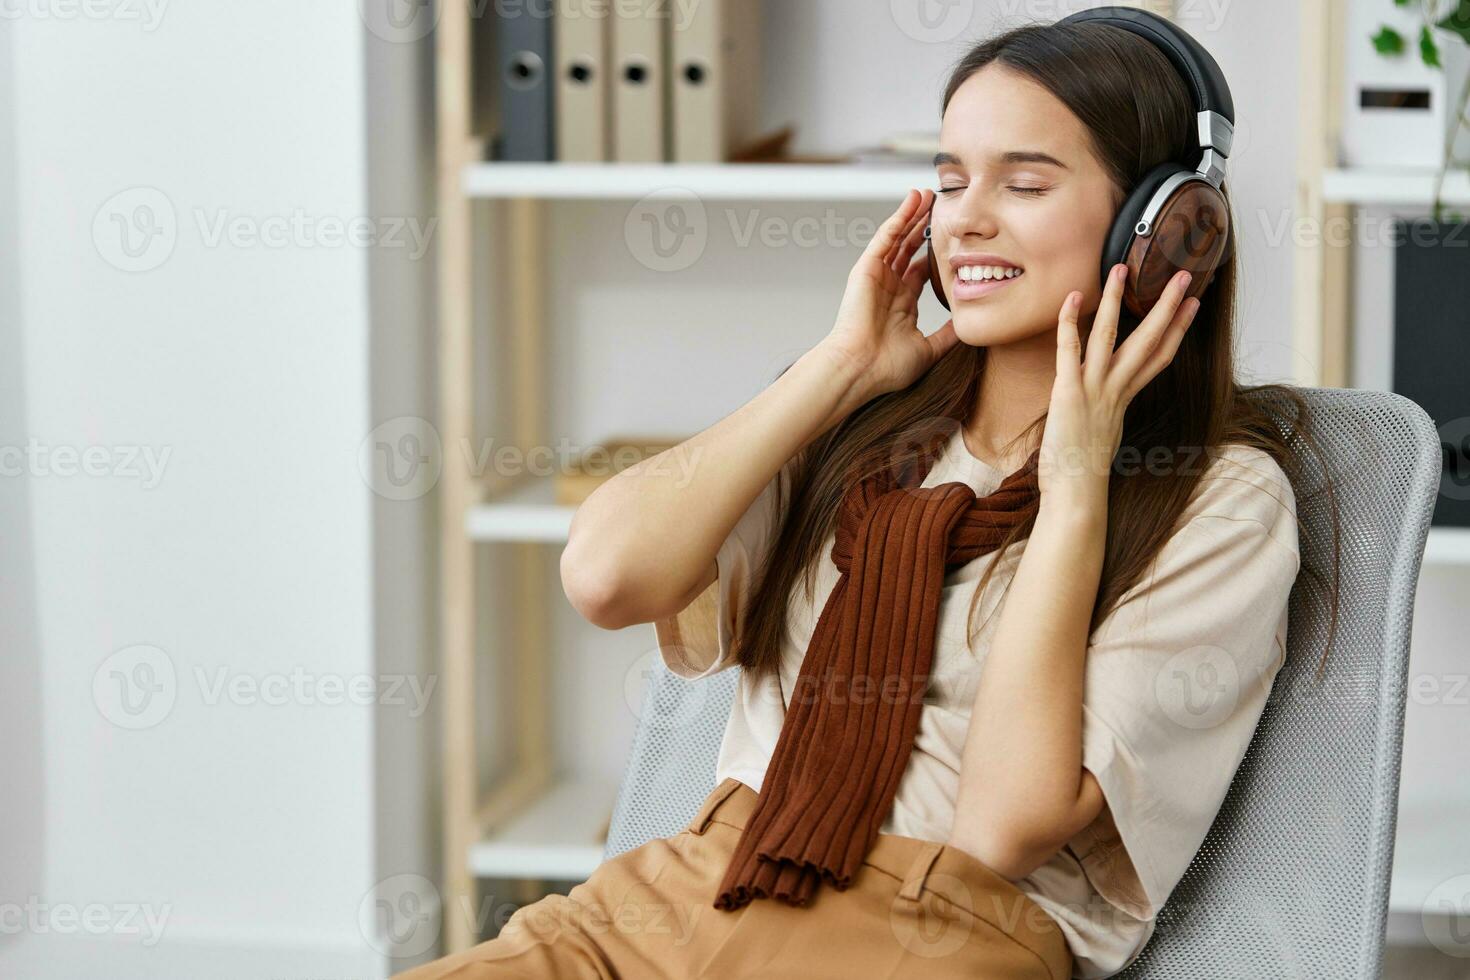 smile girl happy lifestyle chair earphones music meditation teenage phone photo